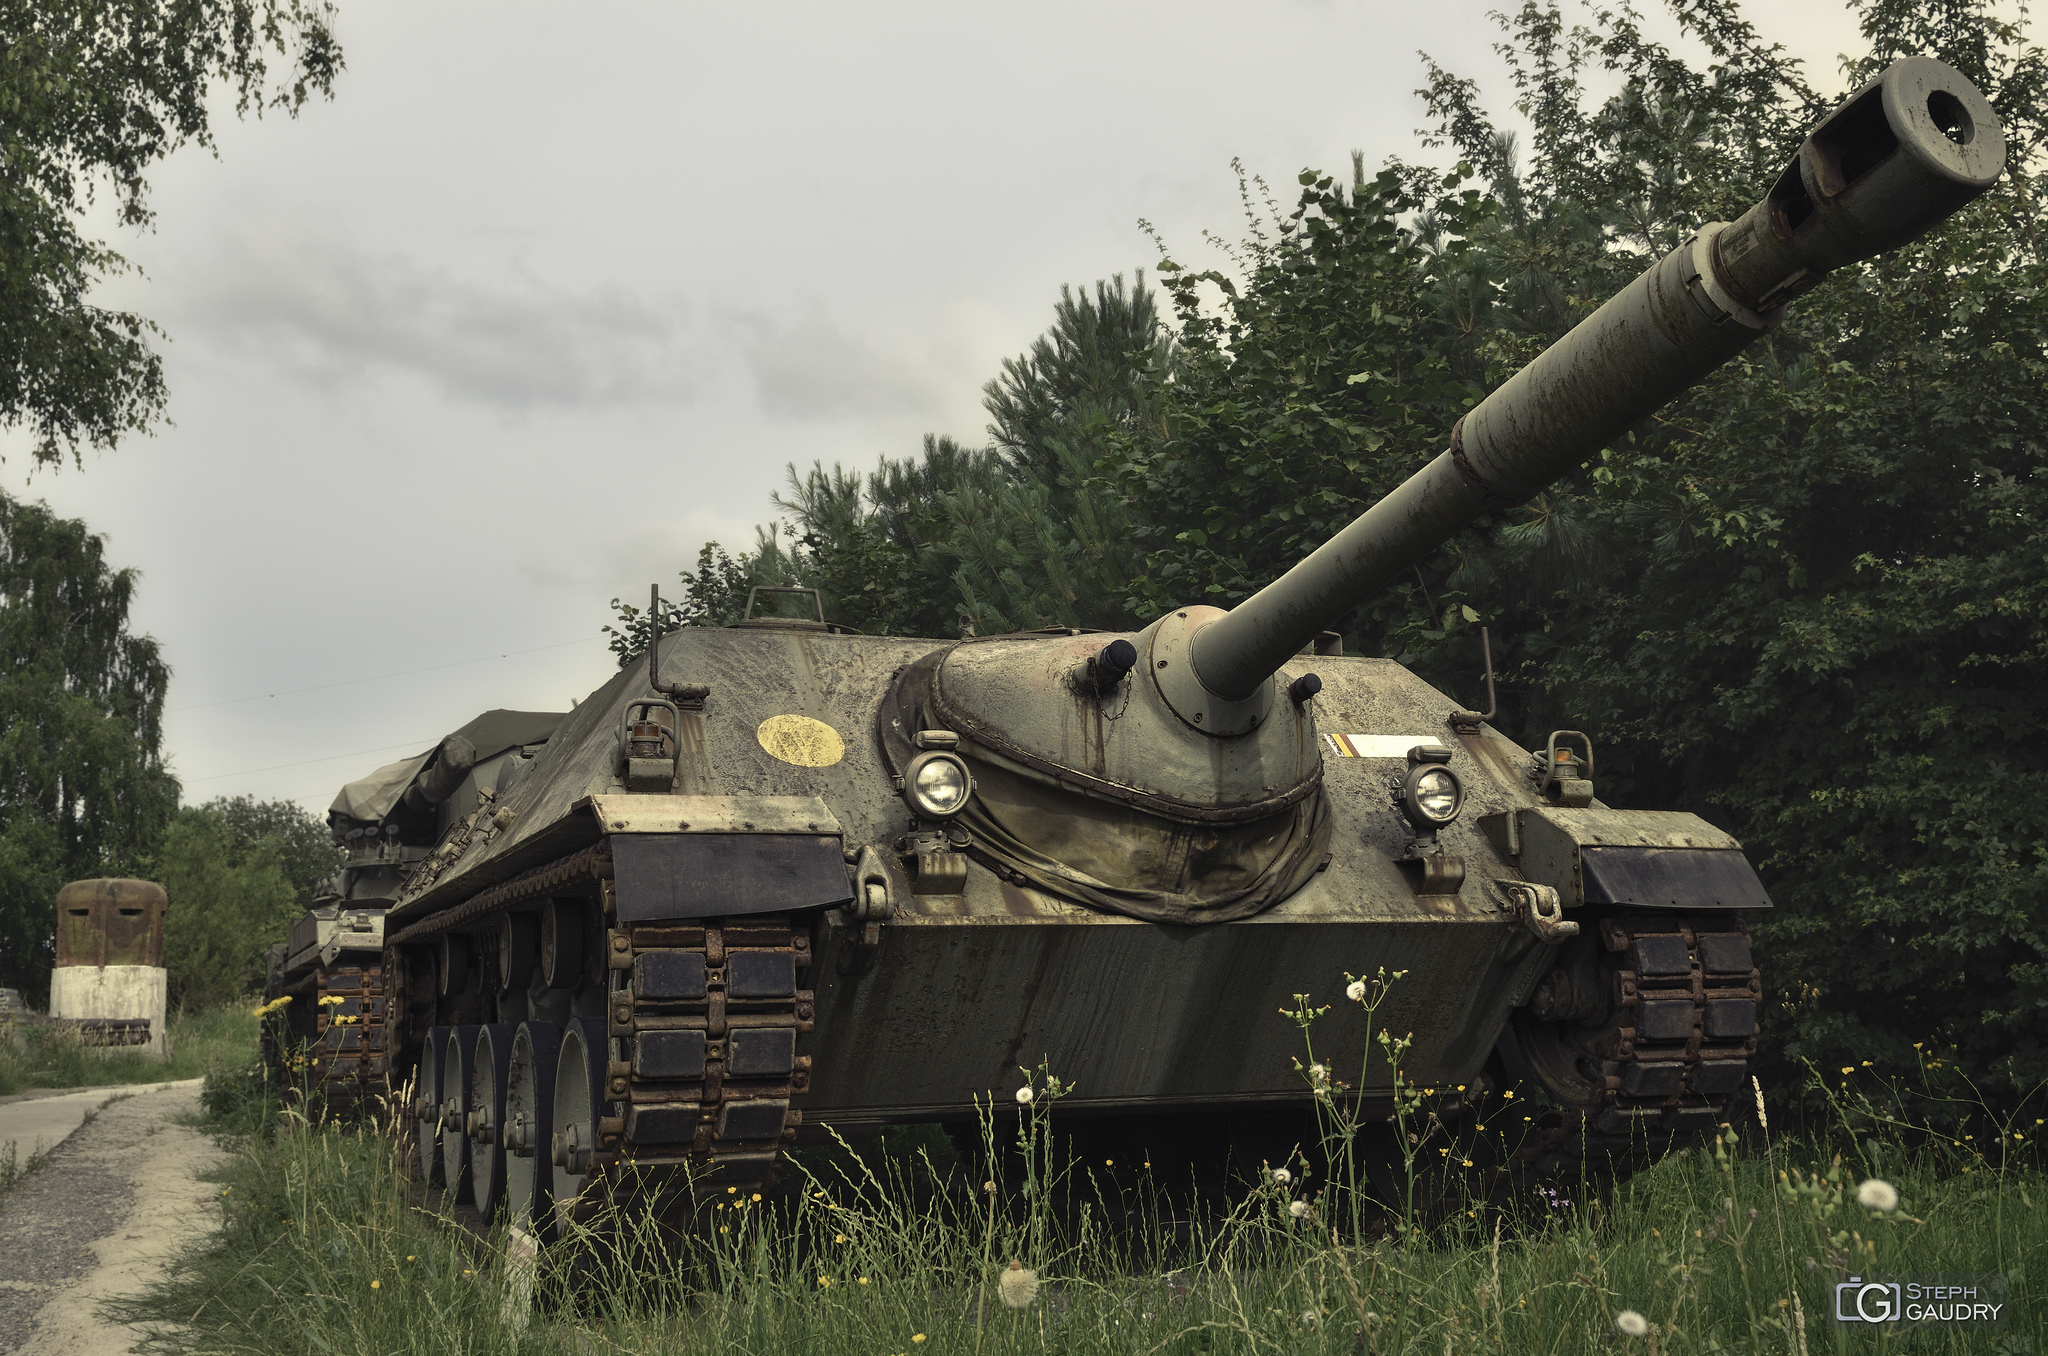 Jagdpanzer Kanone Jpz 4-53 [Klik om de diavoorstelling te starten]